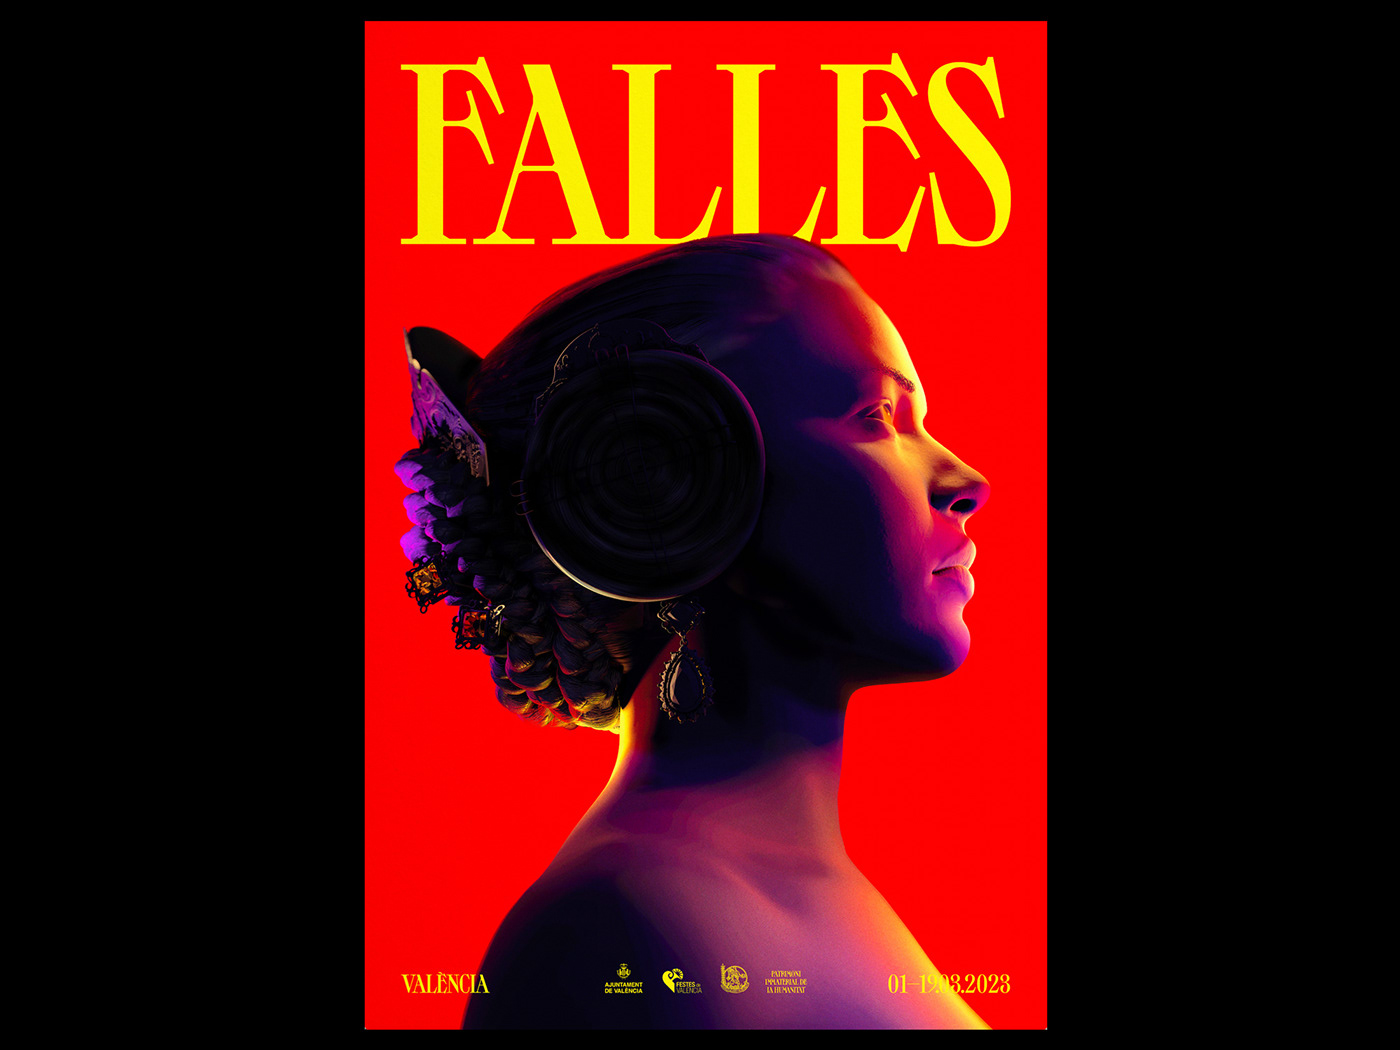 Fallas fireworks culture 3D cg art editorial graphic design  Digital Art  campaign monument